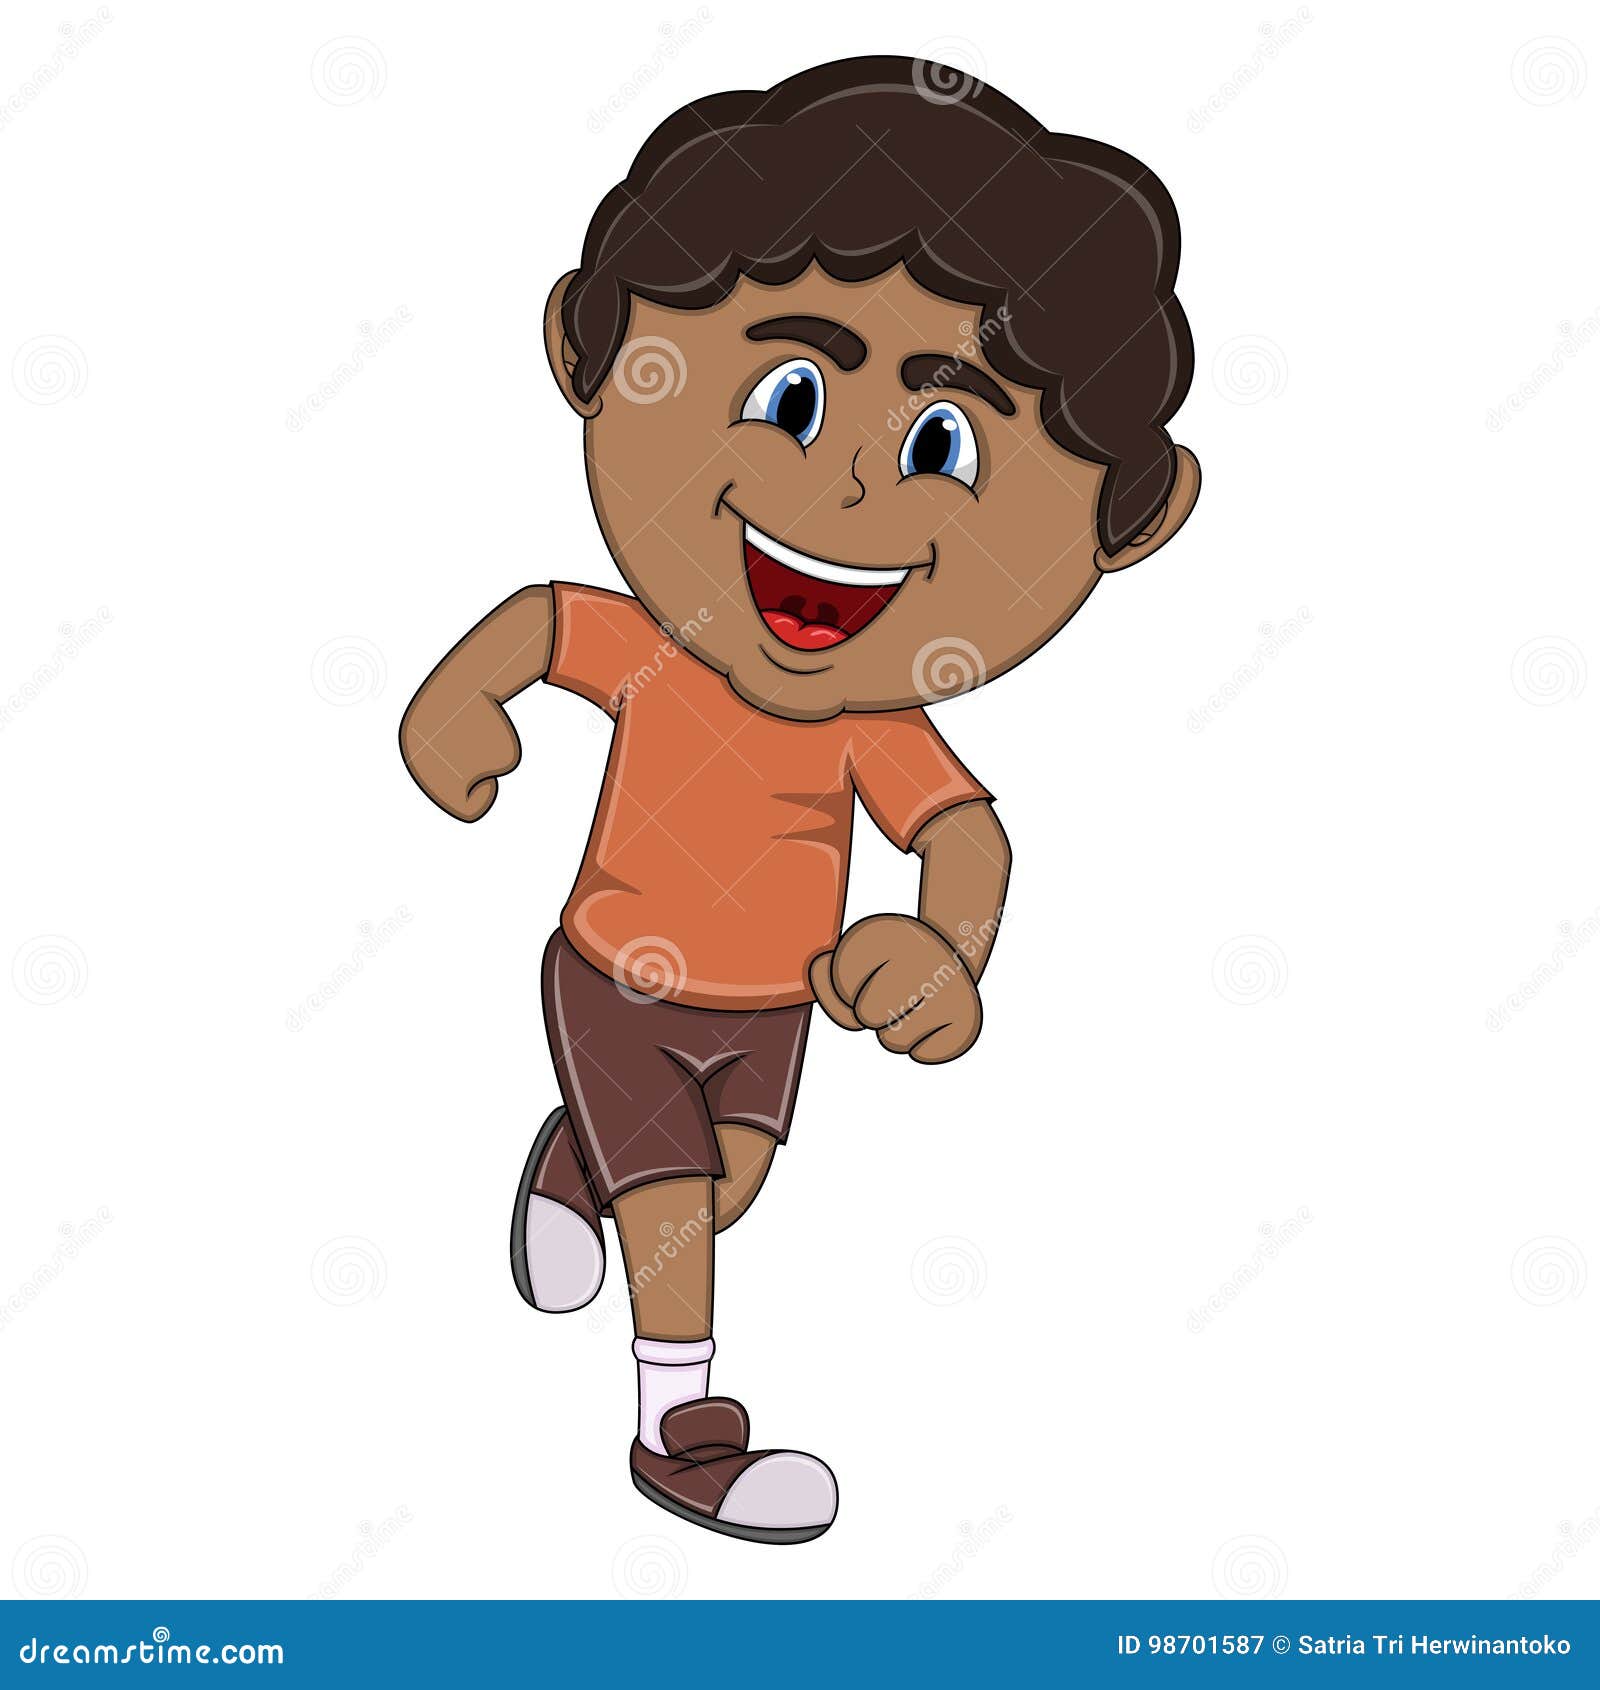 A boy running cartoon stock vector. Illustration of little - 98701587